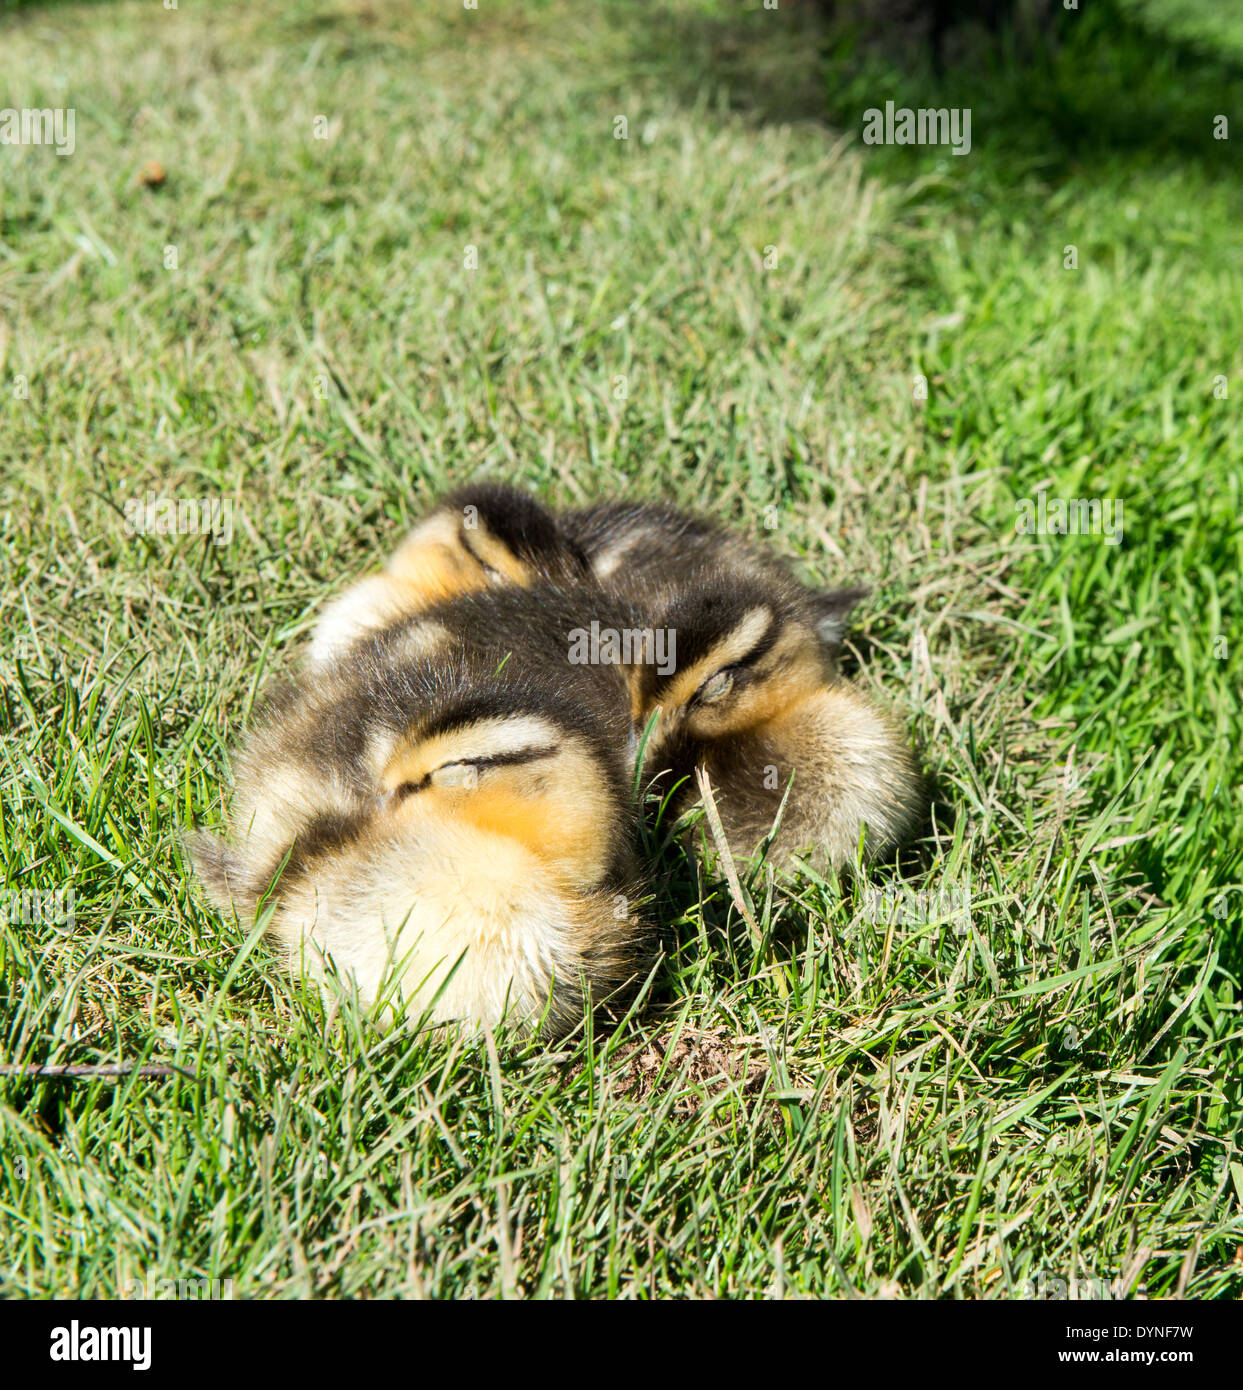 Ducklings sleeping Stock Photo